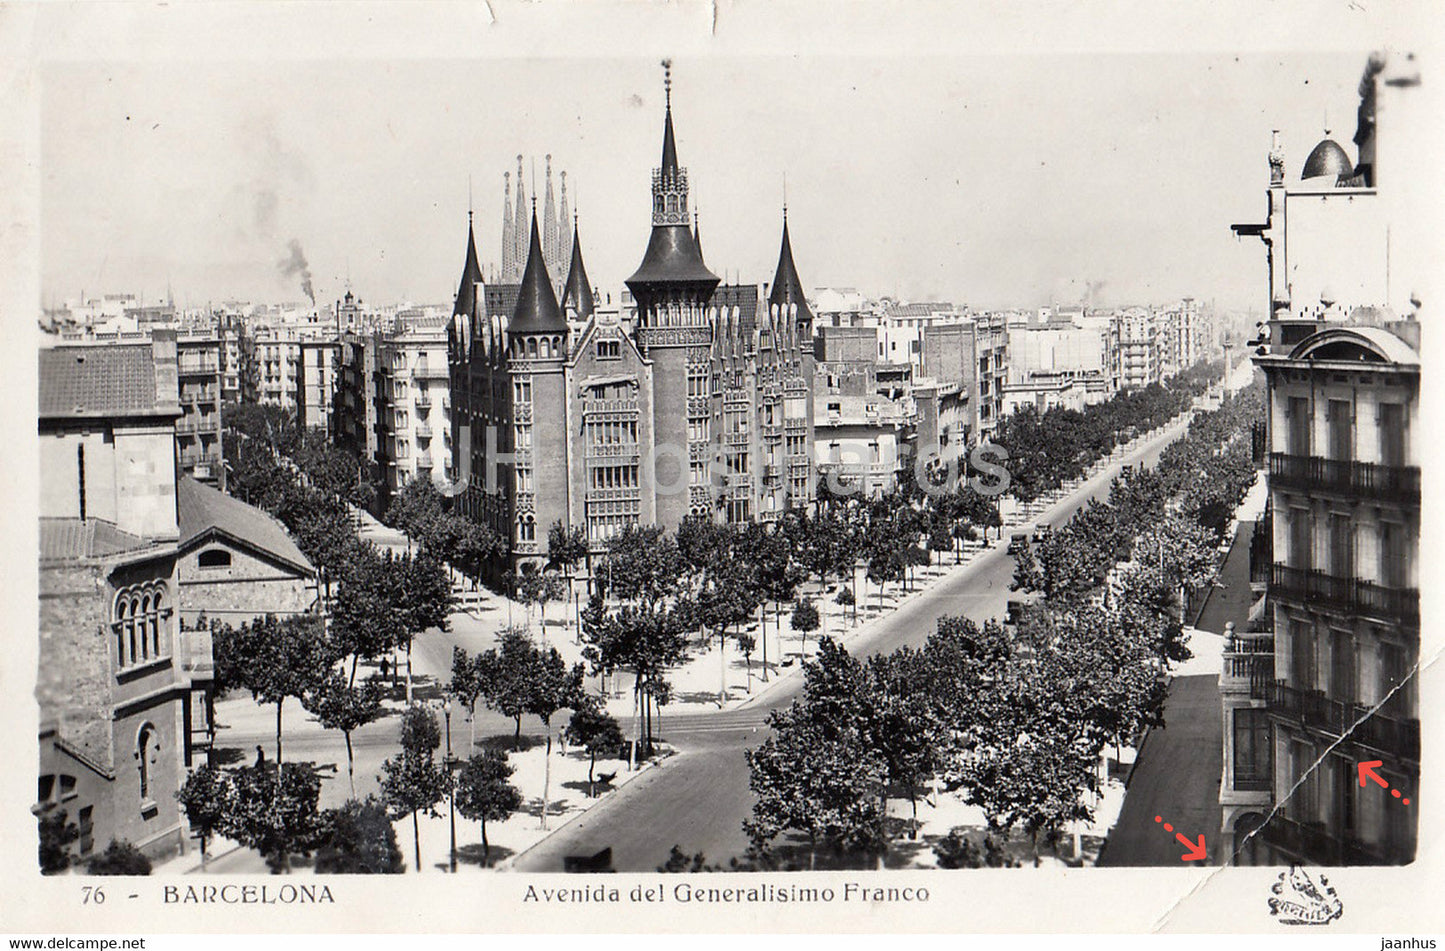 Barcelona - Avenida del Generalisimo Franco - avenue - 76 - old postcard - Spain - used - JH Postcards